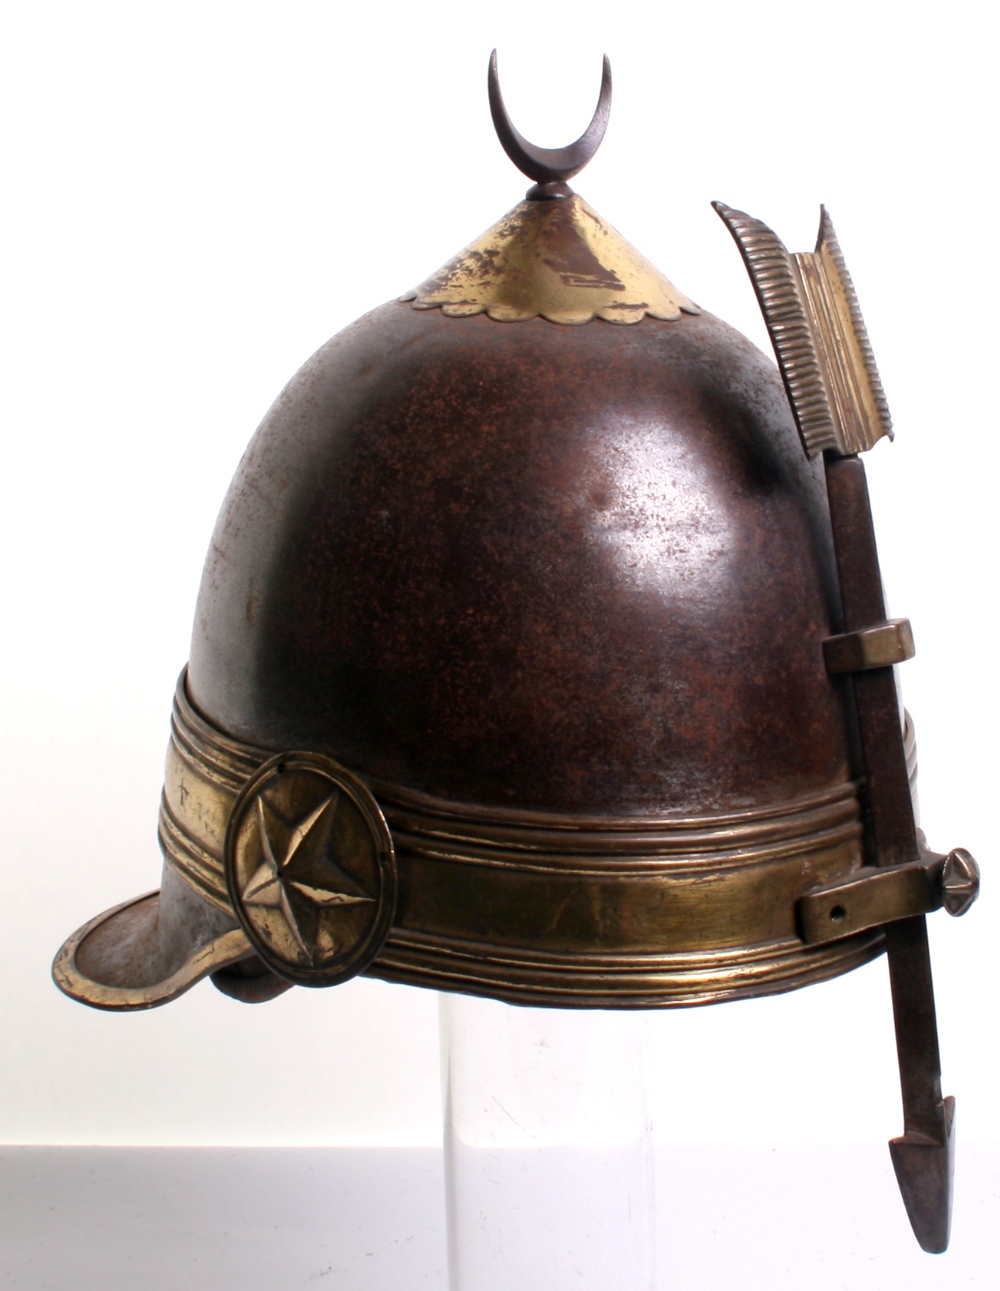 19th Century Ottoman Empire Khedive Palace Guards Helmet, tall steel skull surmounted by an iron